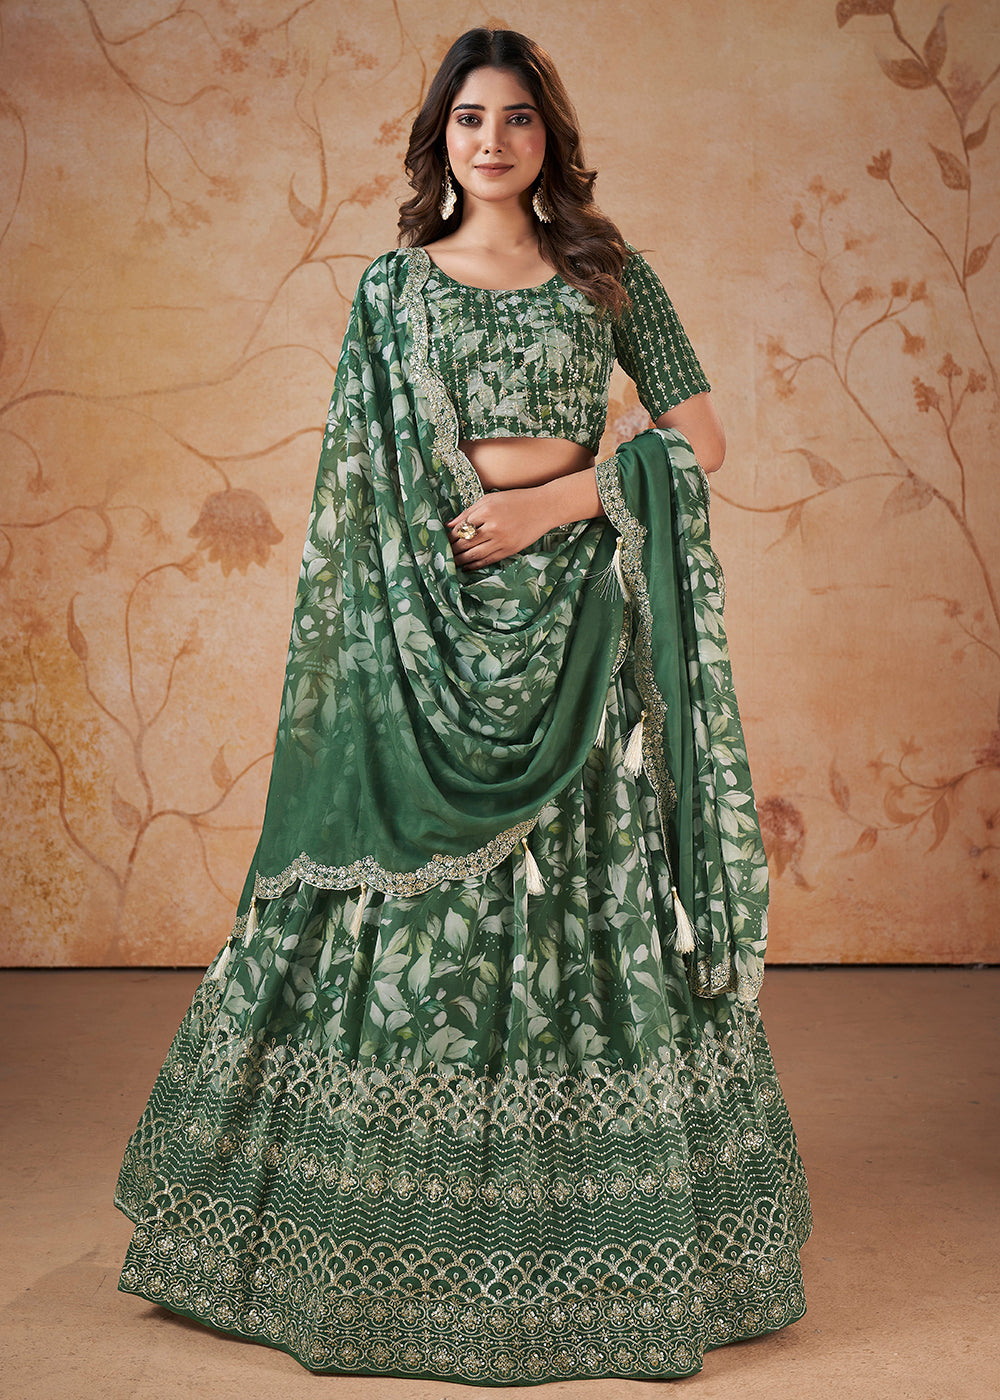 Buy Now Green Digital Print & Sequins Wedding Festive Lehenga Choli Online in USA, UK, Canada & Worldwide at Empress Clothing.